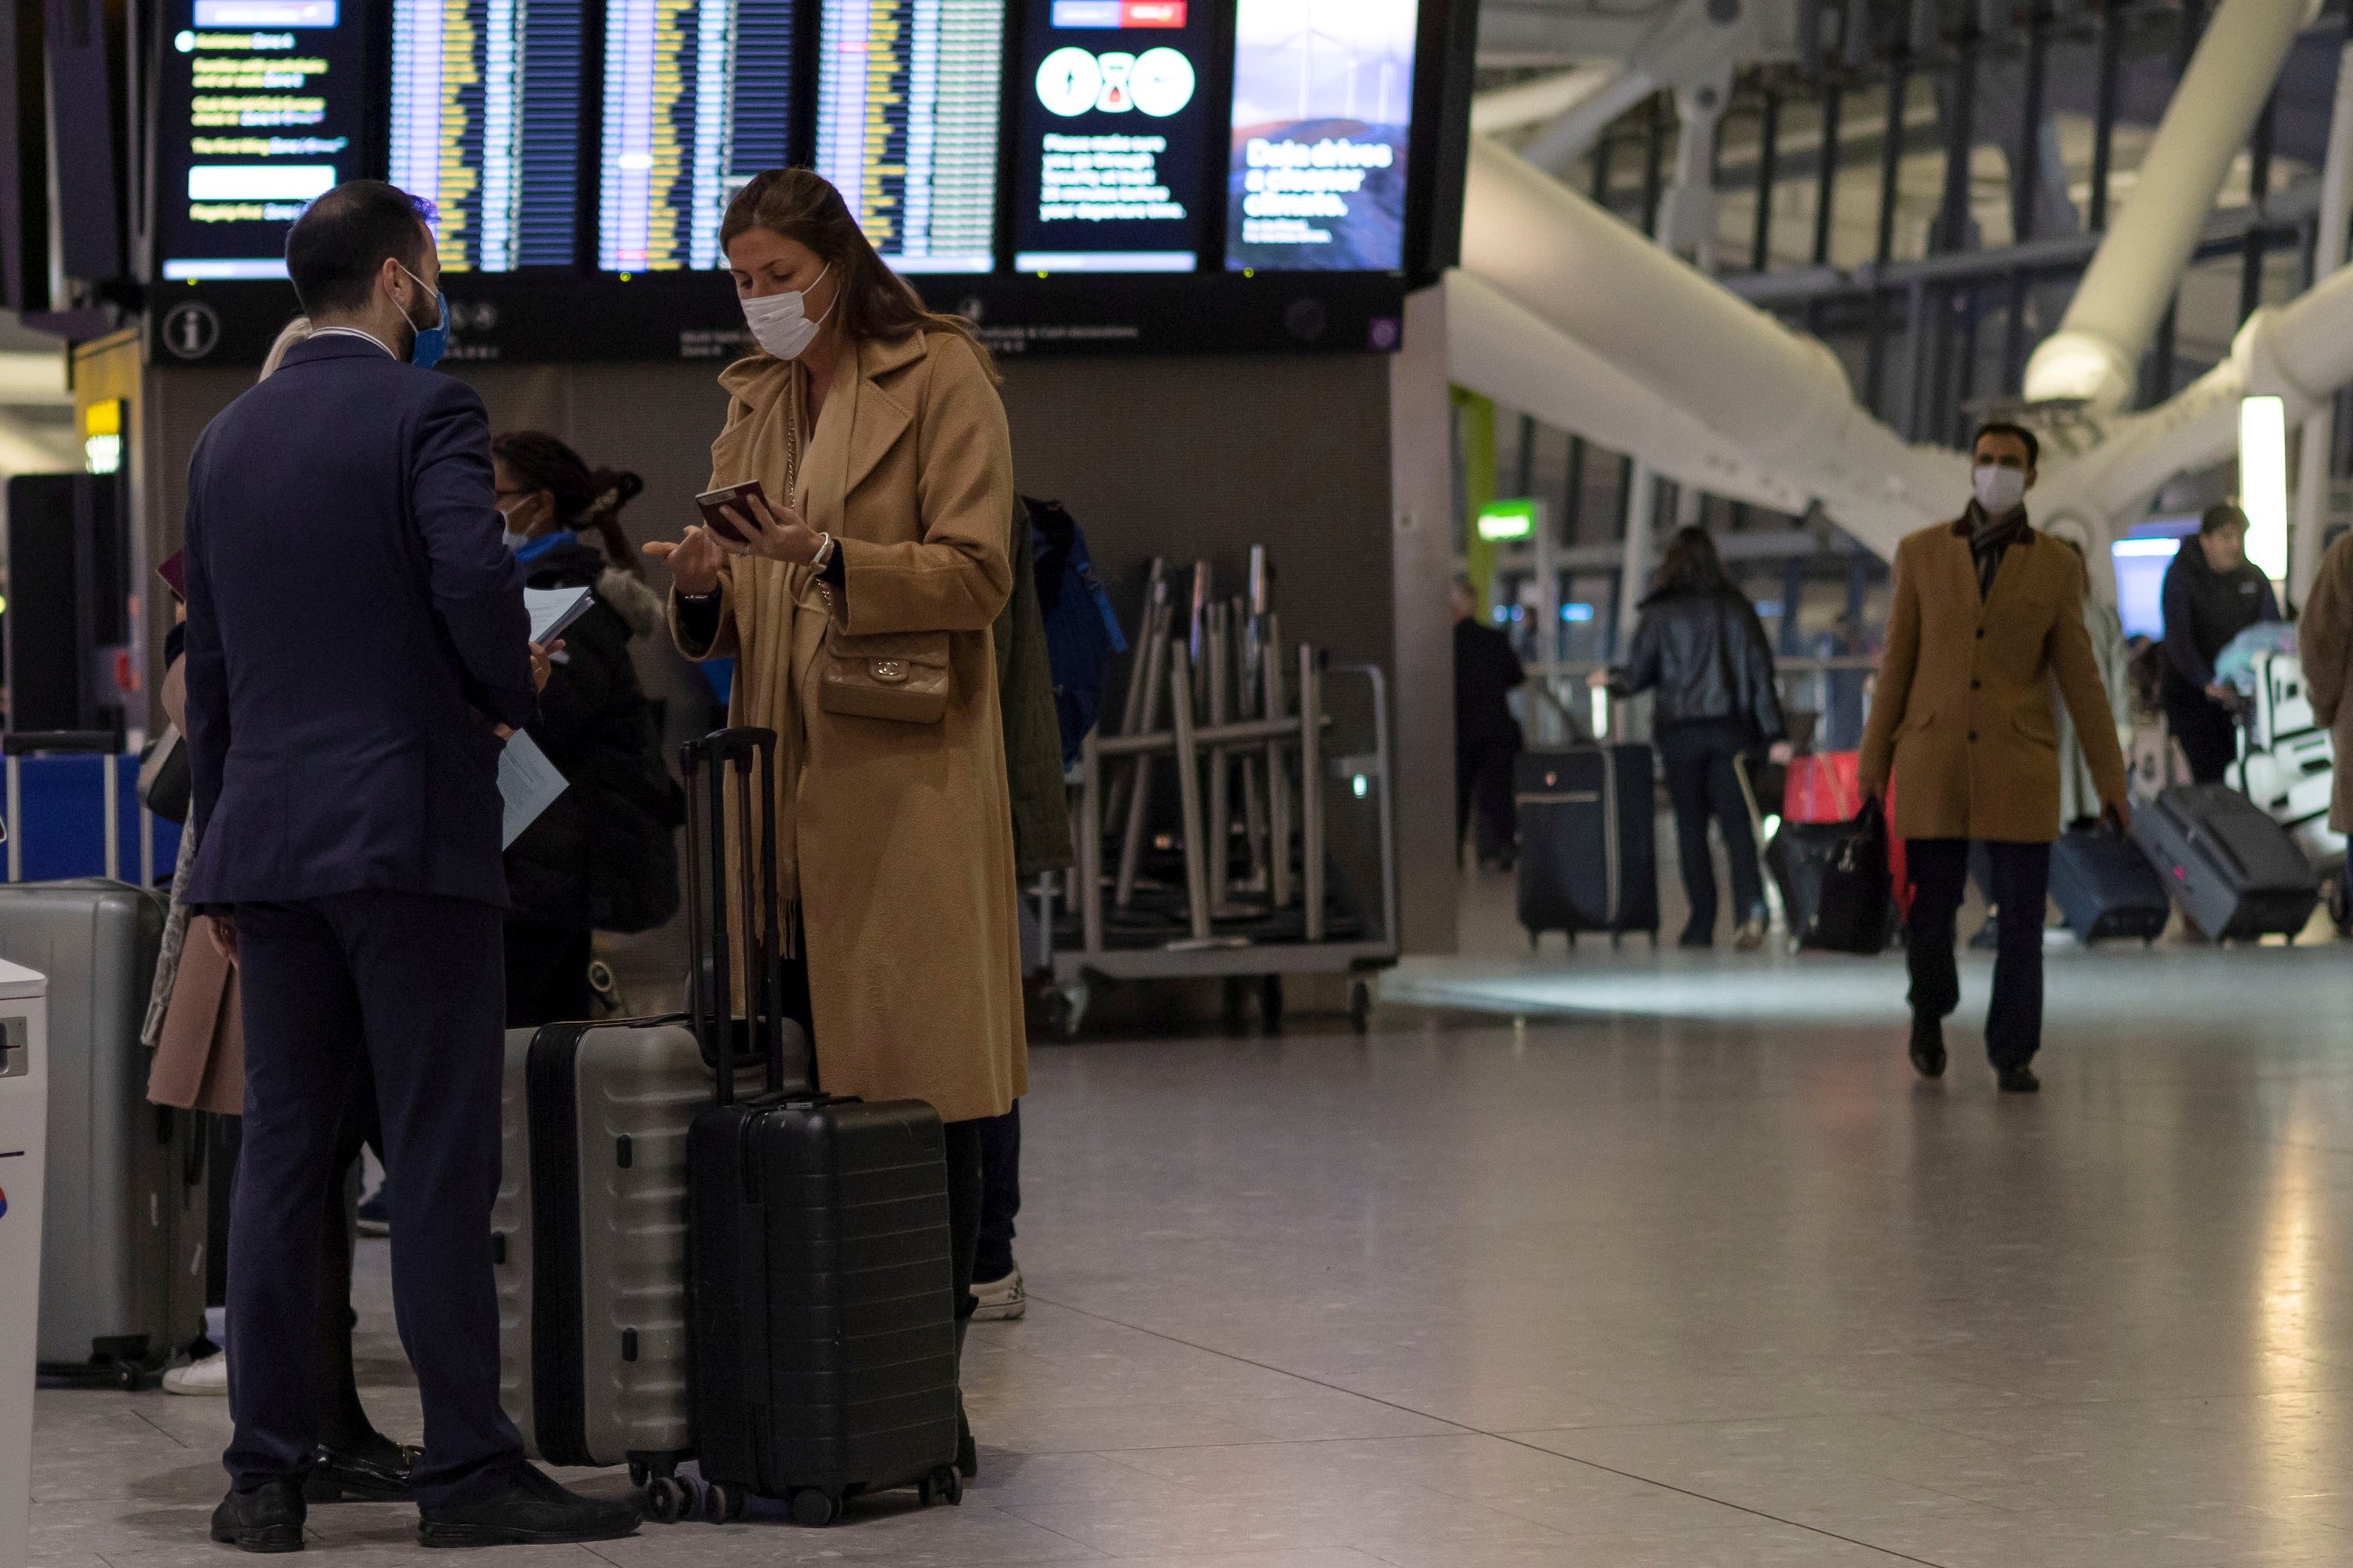 British Airways owner IAG says transatlantic bookings close to 2019 levels